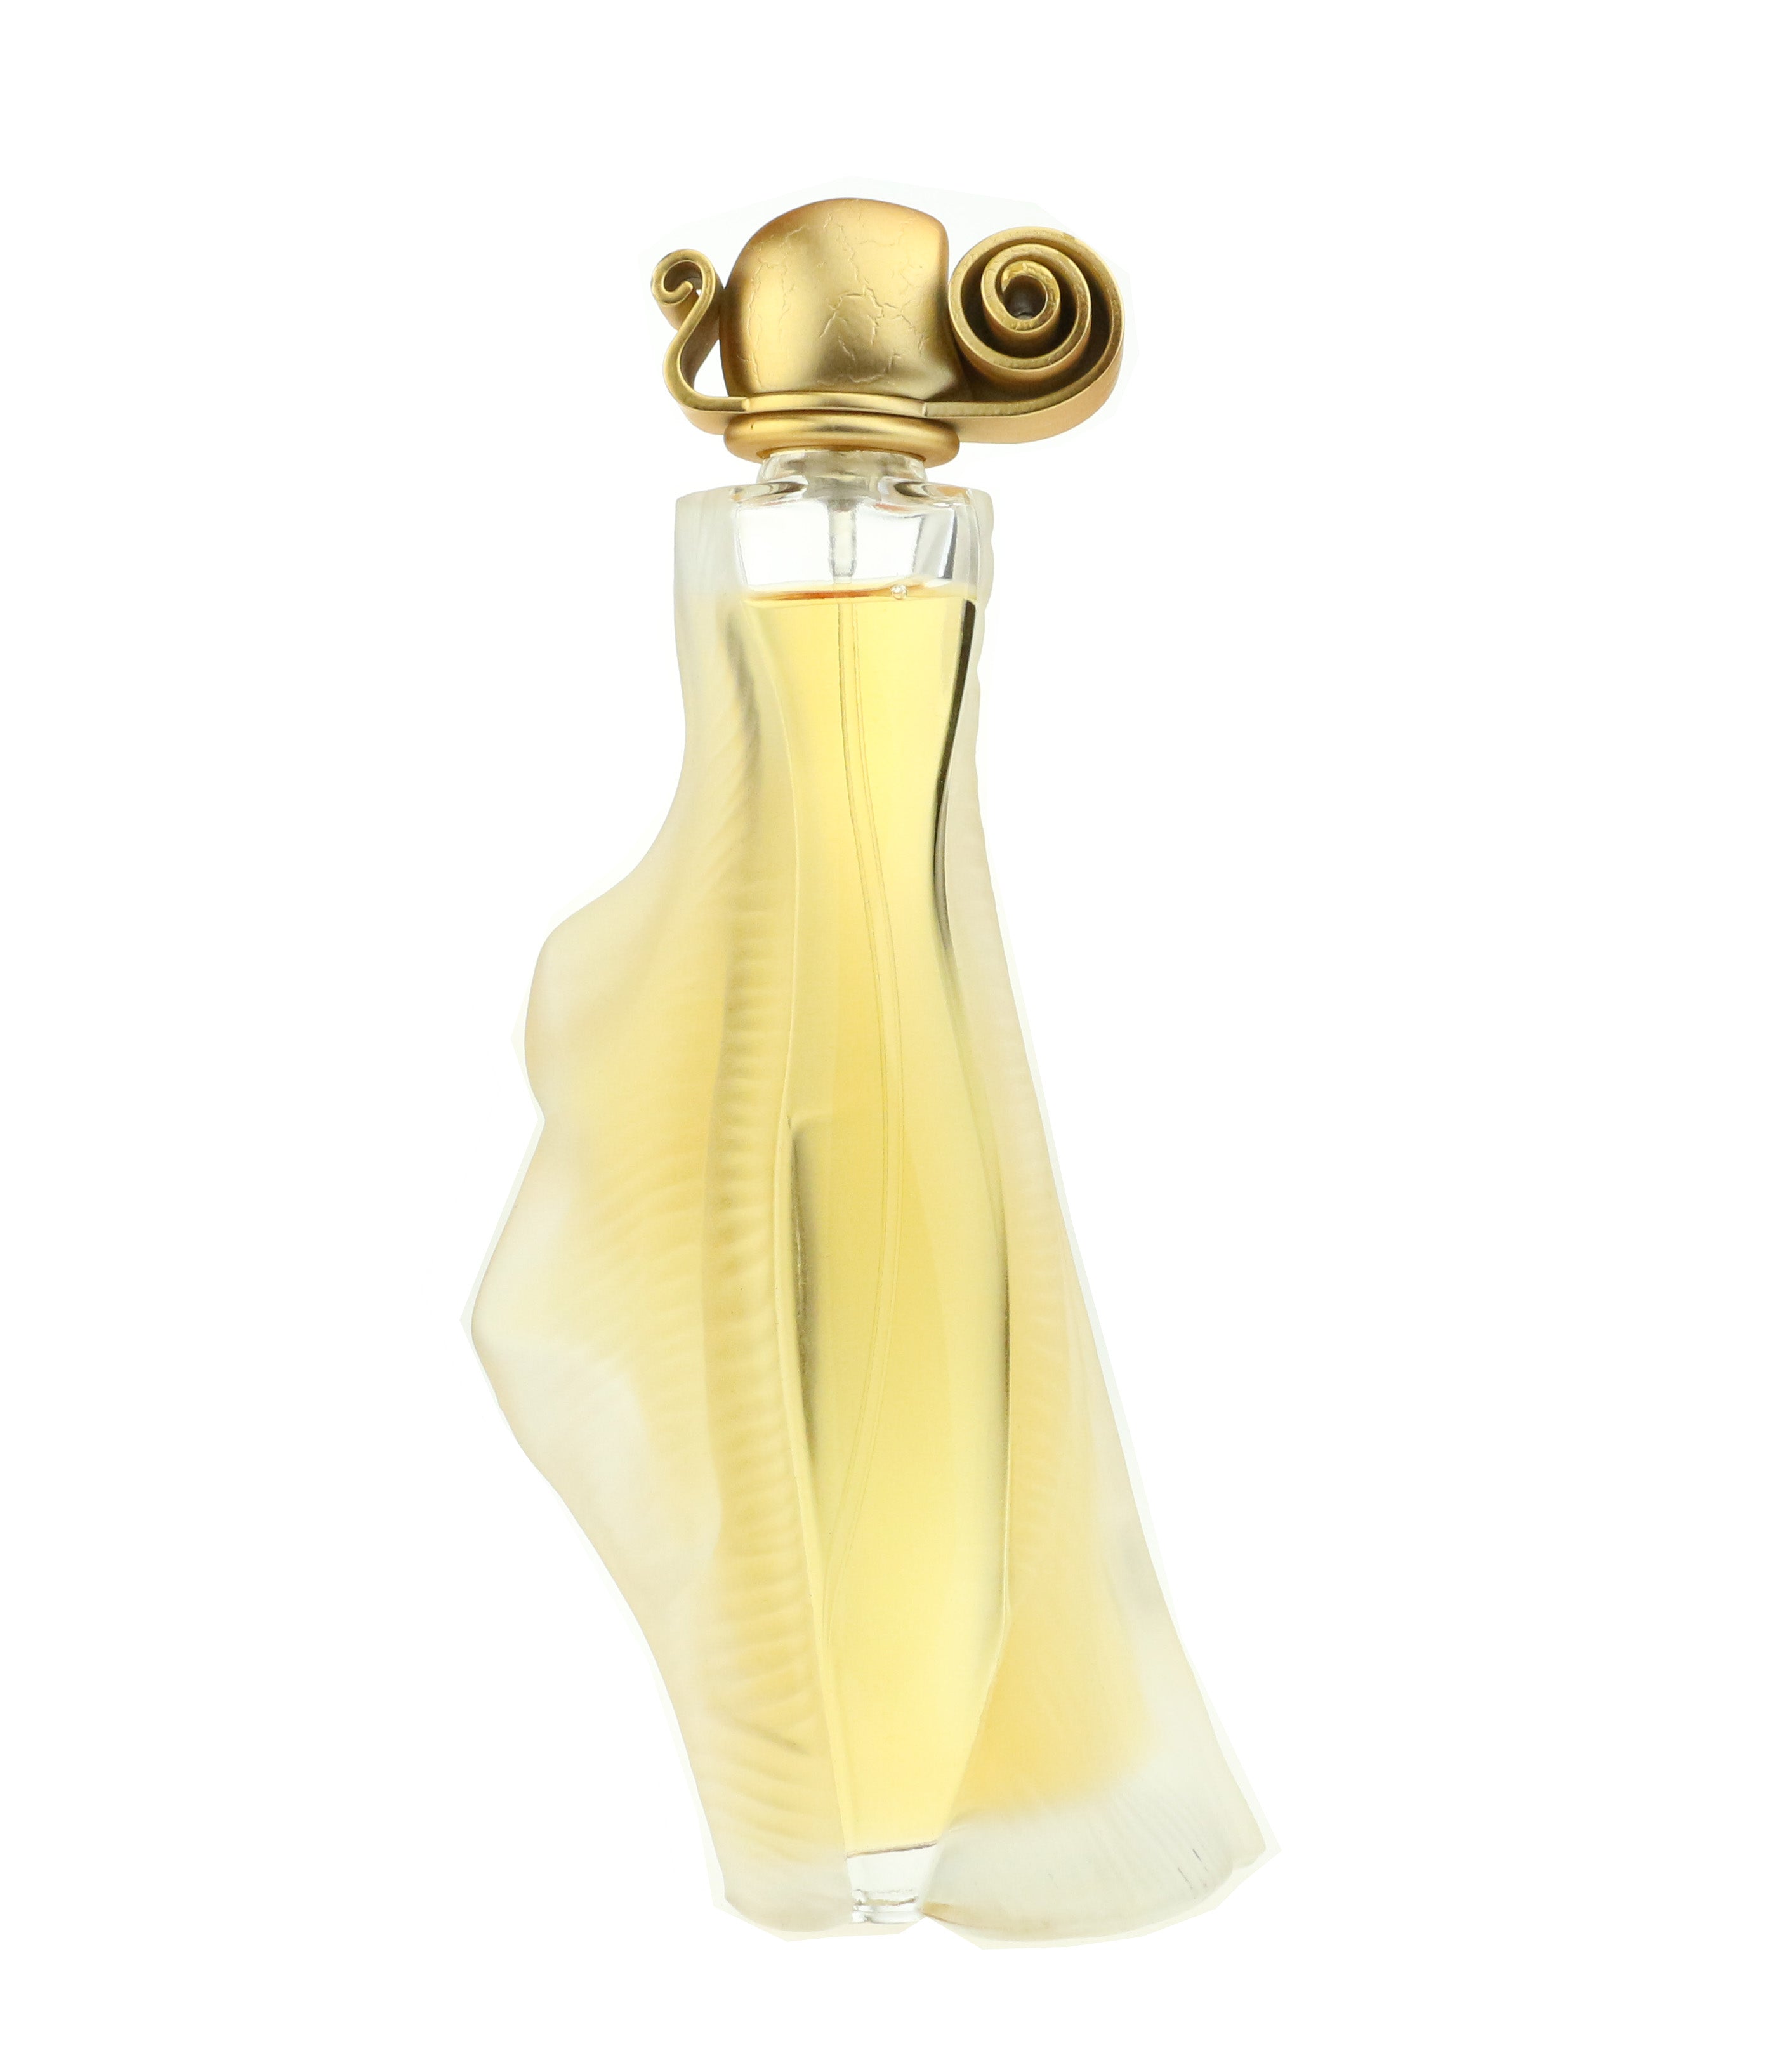 Givenchy Organza Eau de Parfum, Perfume for Women, 1.7 Oz